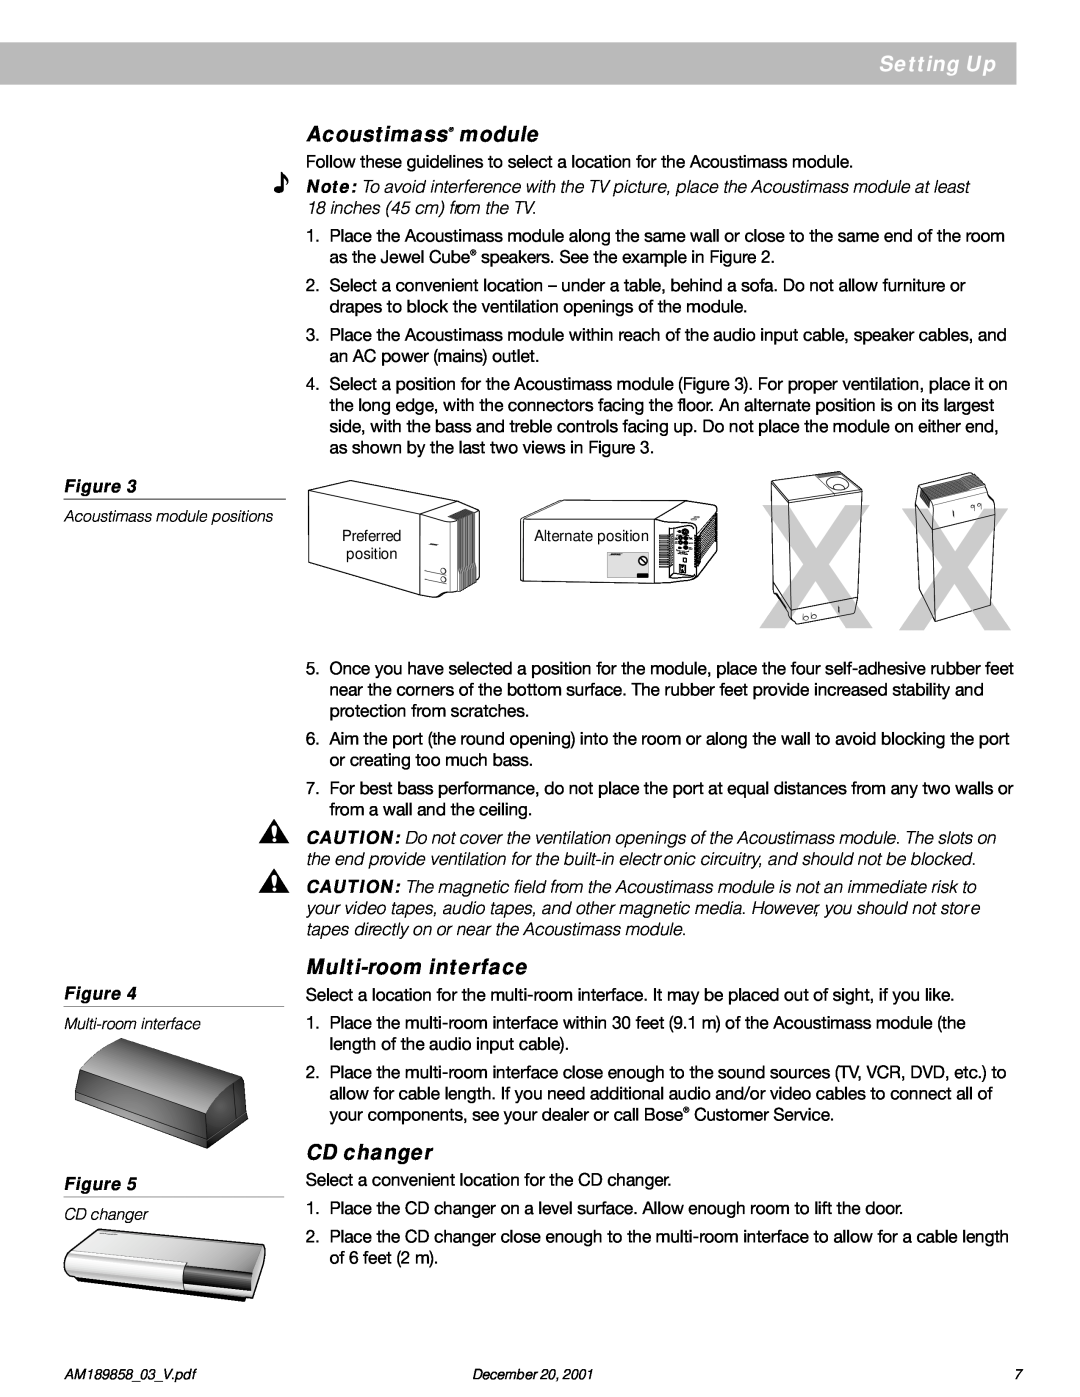 Bose 40 manual Setting Up, Acoustimass module, Multi-roominterface, CD changer, Figure 